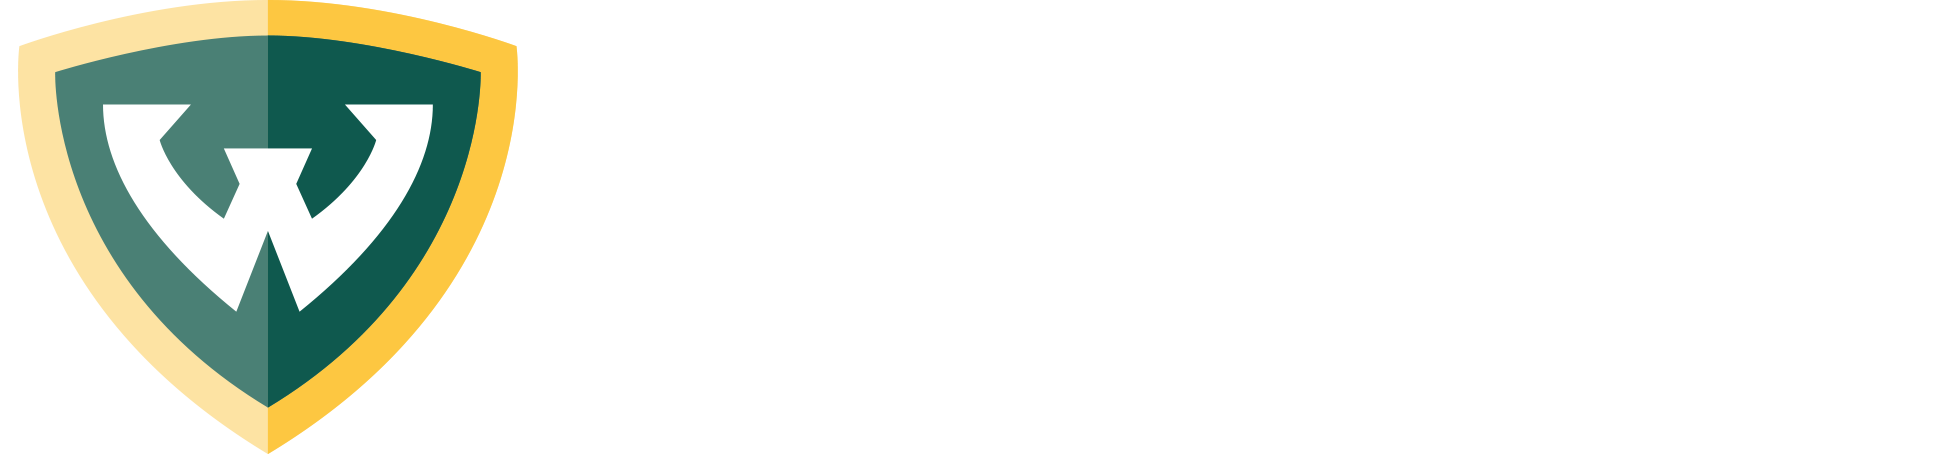 Wayne State University (WSU) Logo